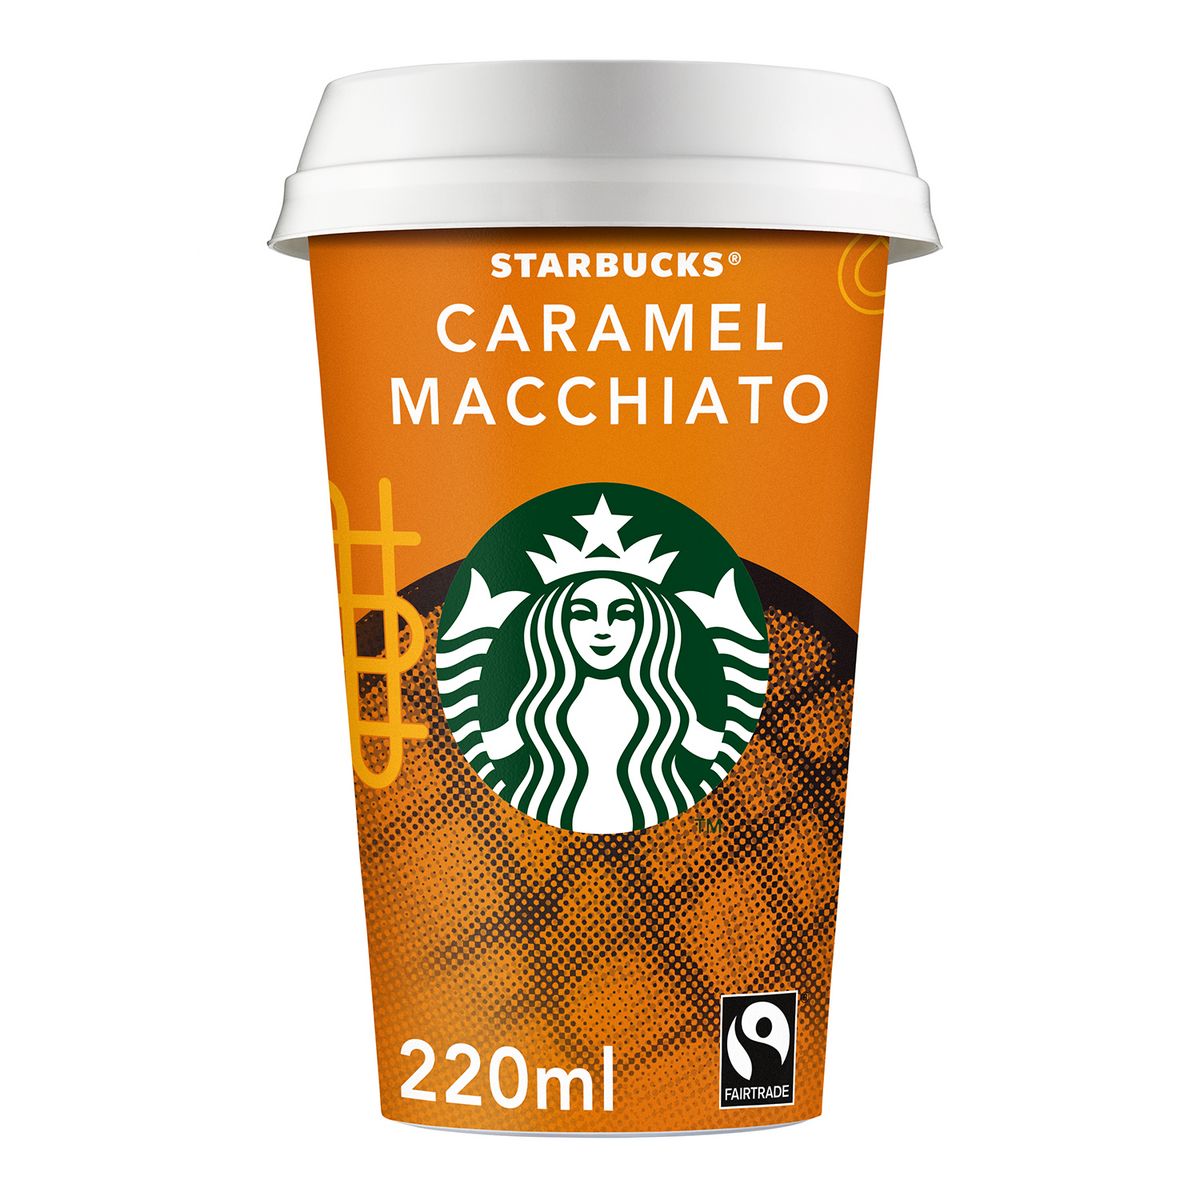 STARBUCKS Caramel Macchiato - Boisson lactée au café arabica 220ml